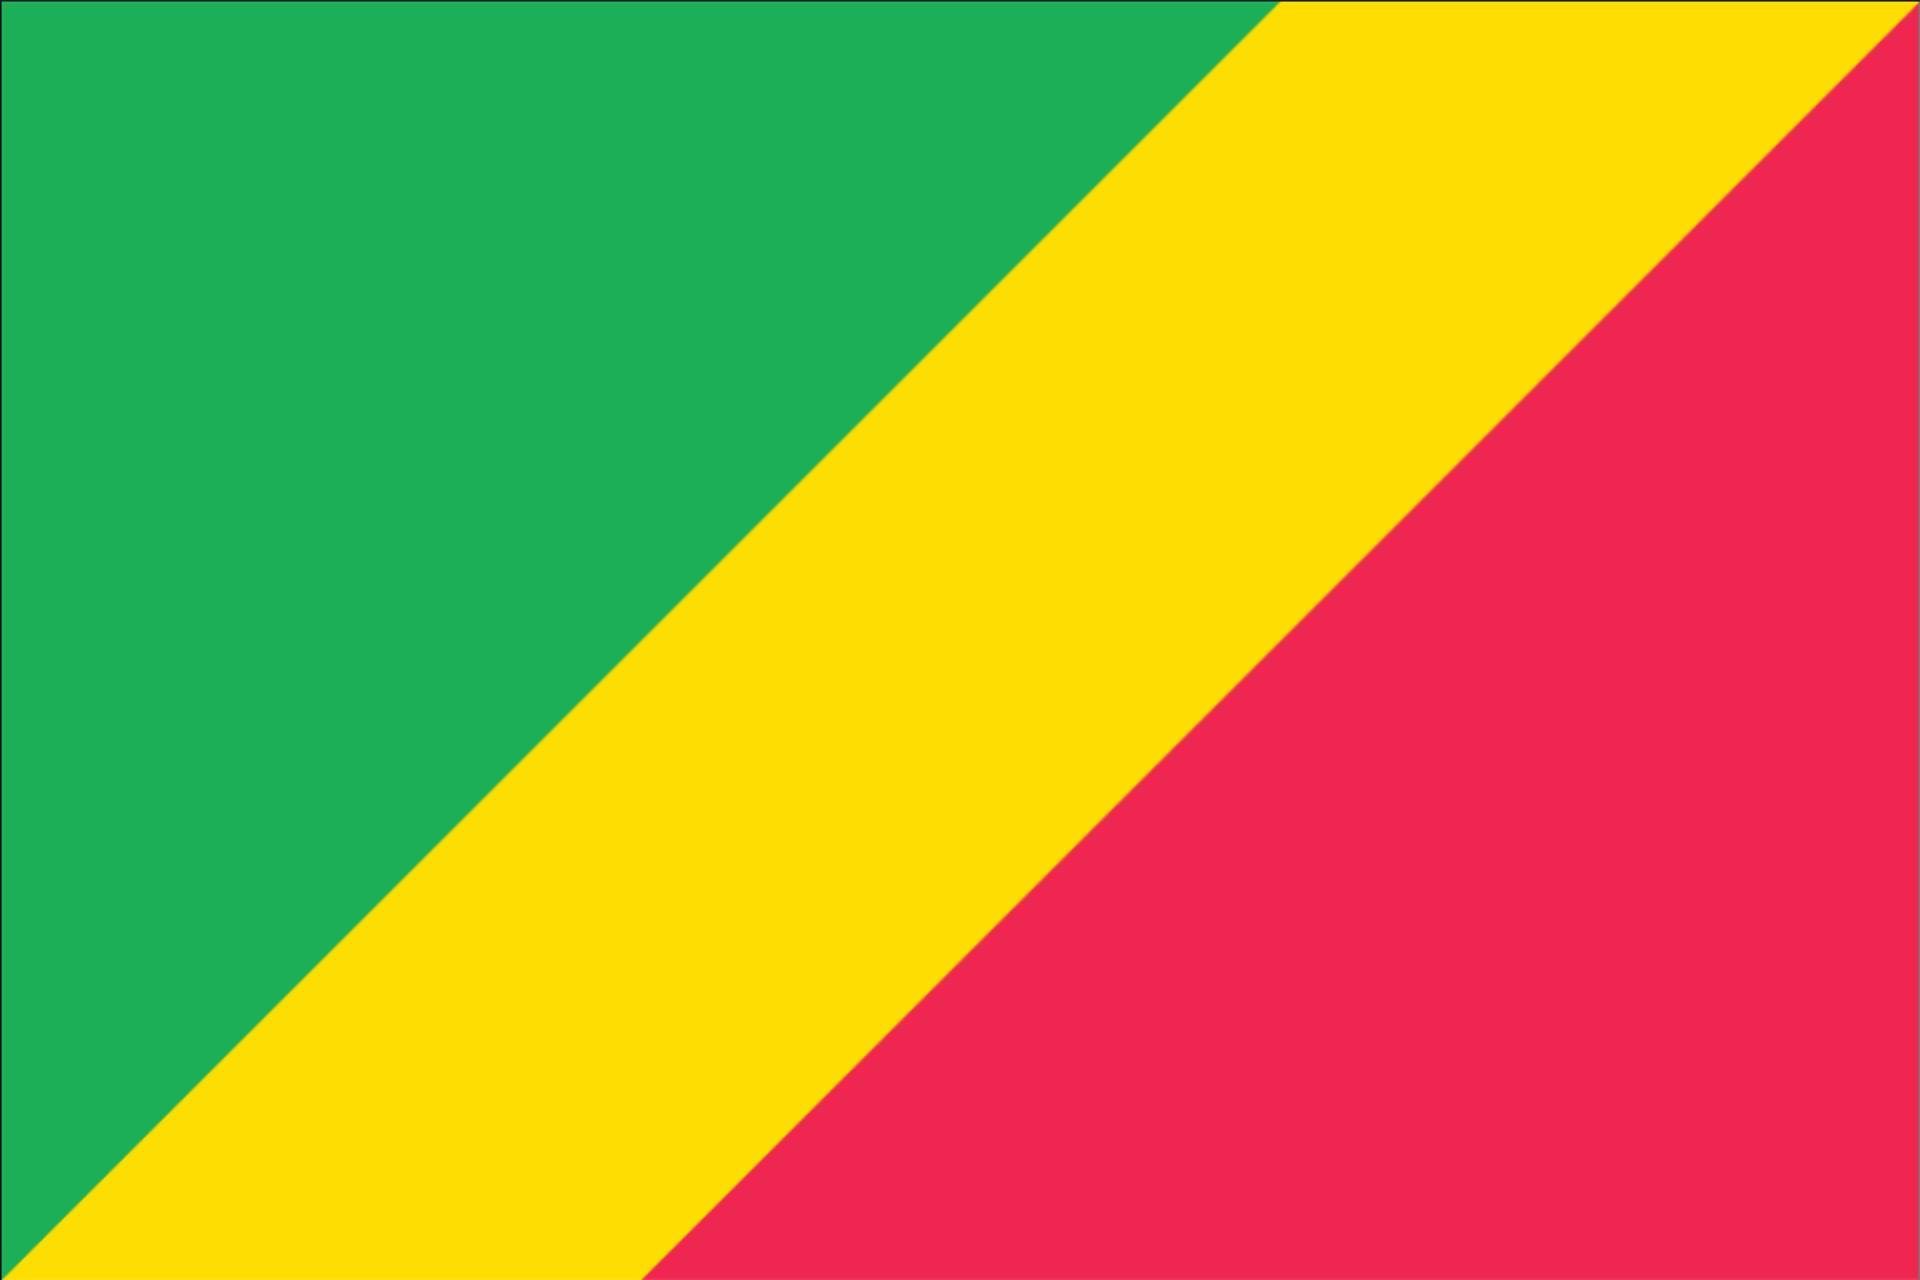 flaggenmeer Flagge Kongo, Republik (Brazzaville) 80 g/m²